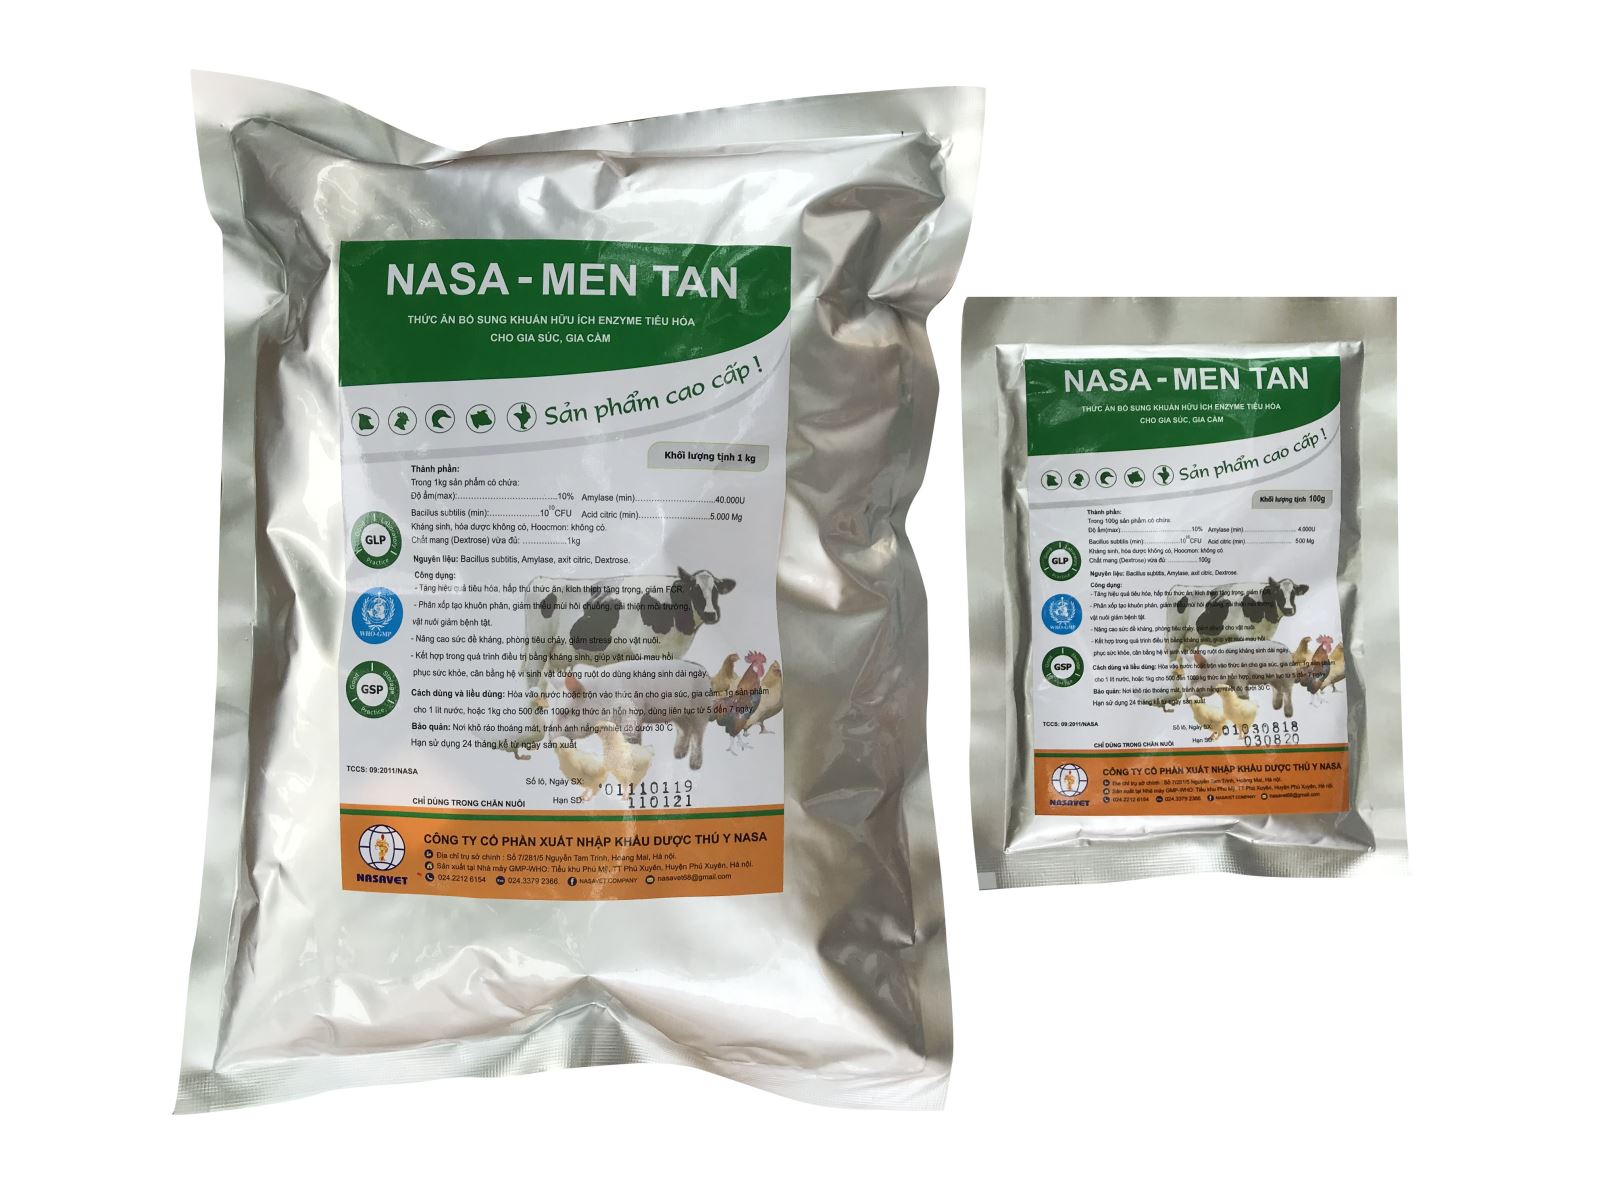 NASA - MEN TAN